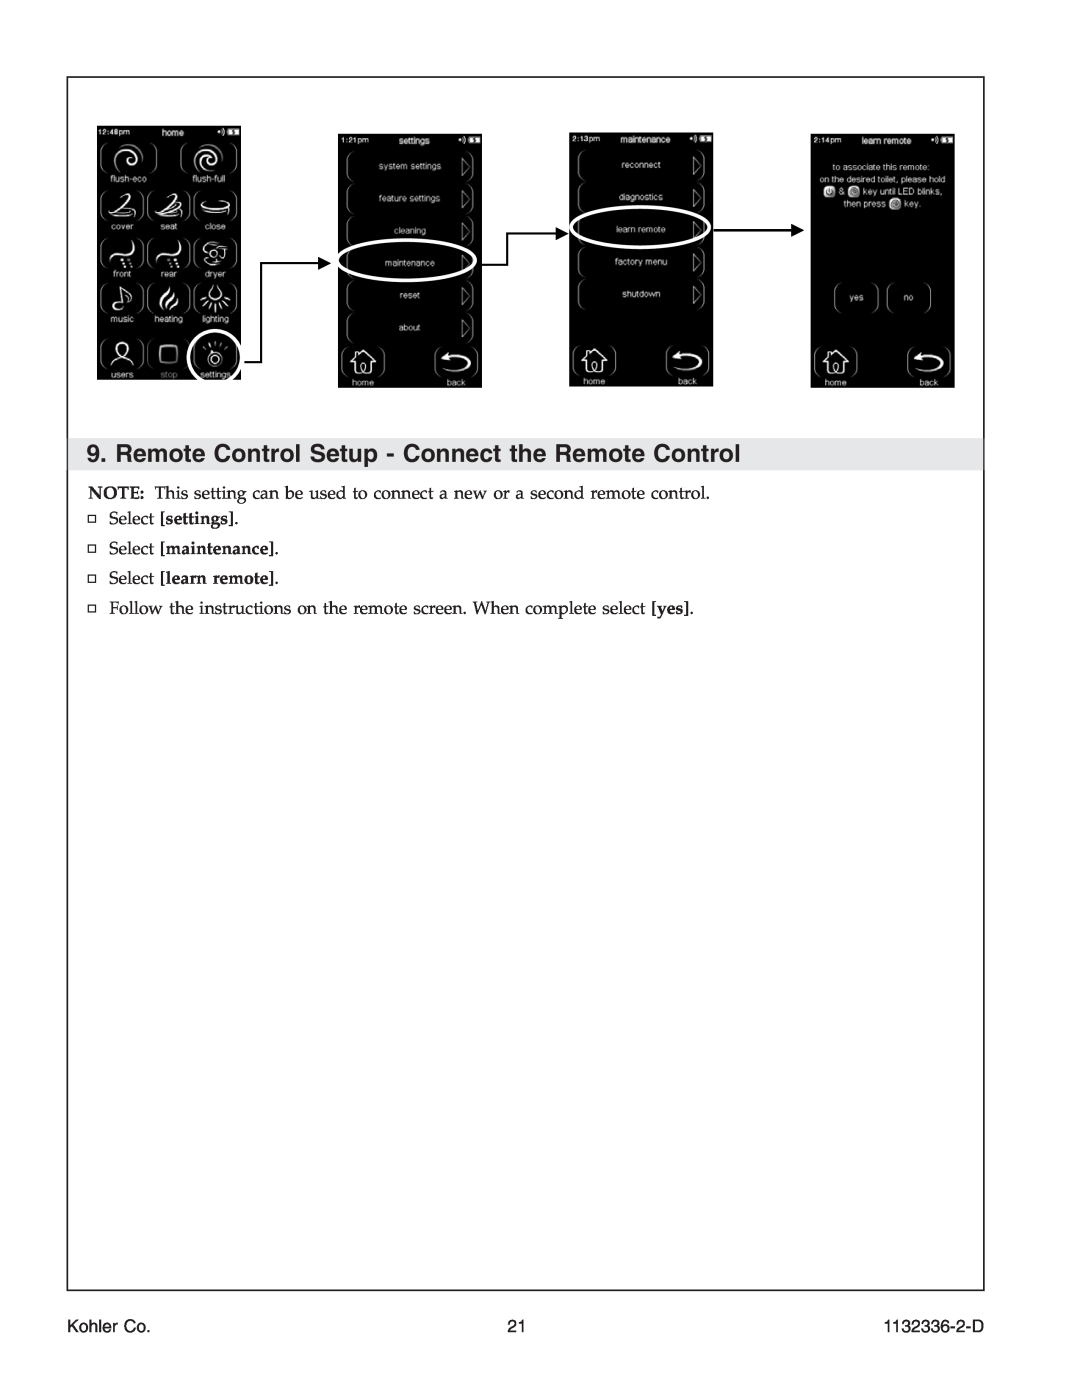 Kohler K-3900 manual Select maintenance Select learn remote, Kohler Co, 1132336-2-D 